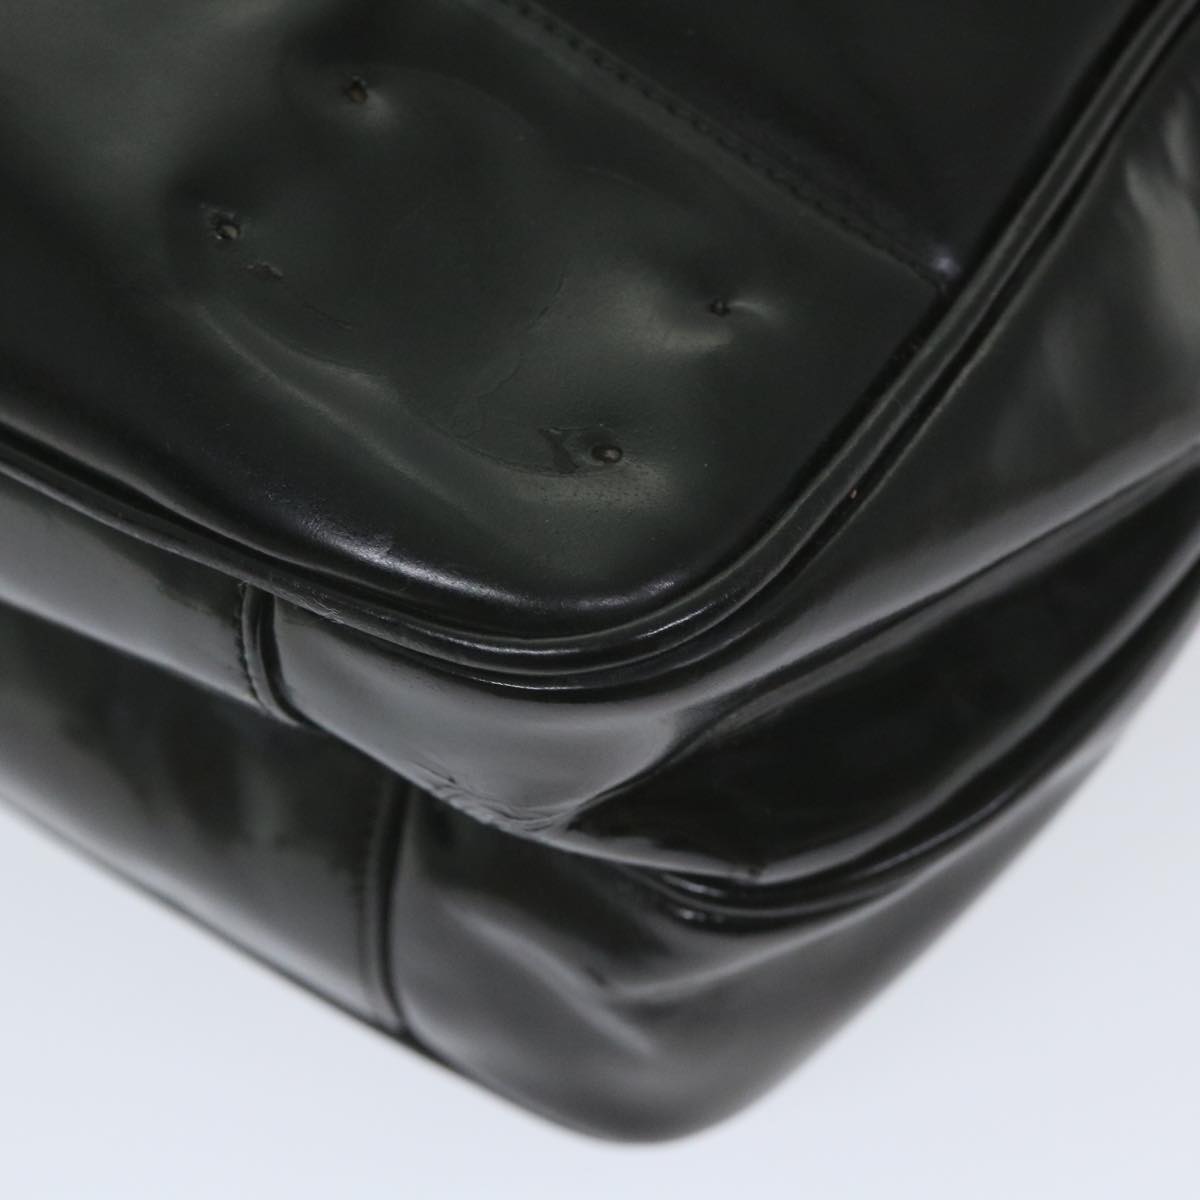 CHANEL Chain Shoulder Bag Patent leather Black CC Auth bs10115